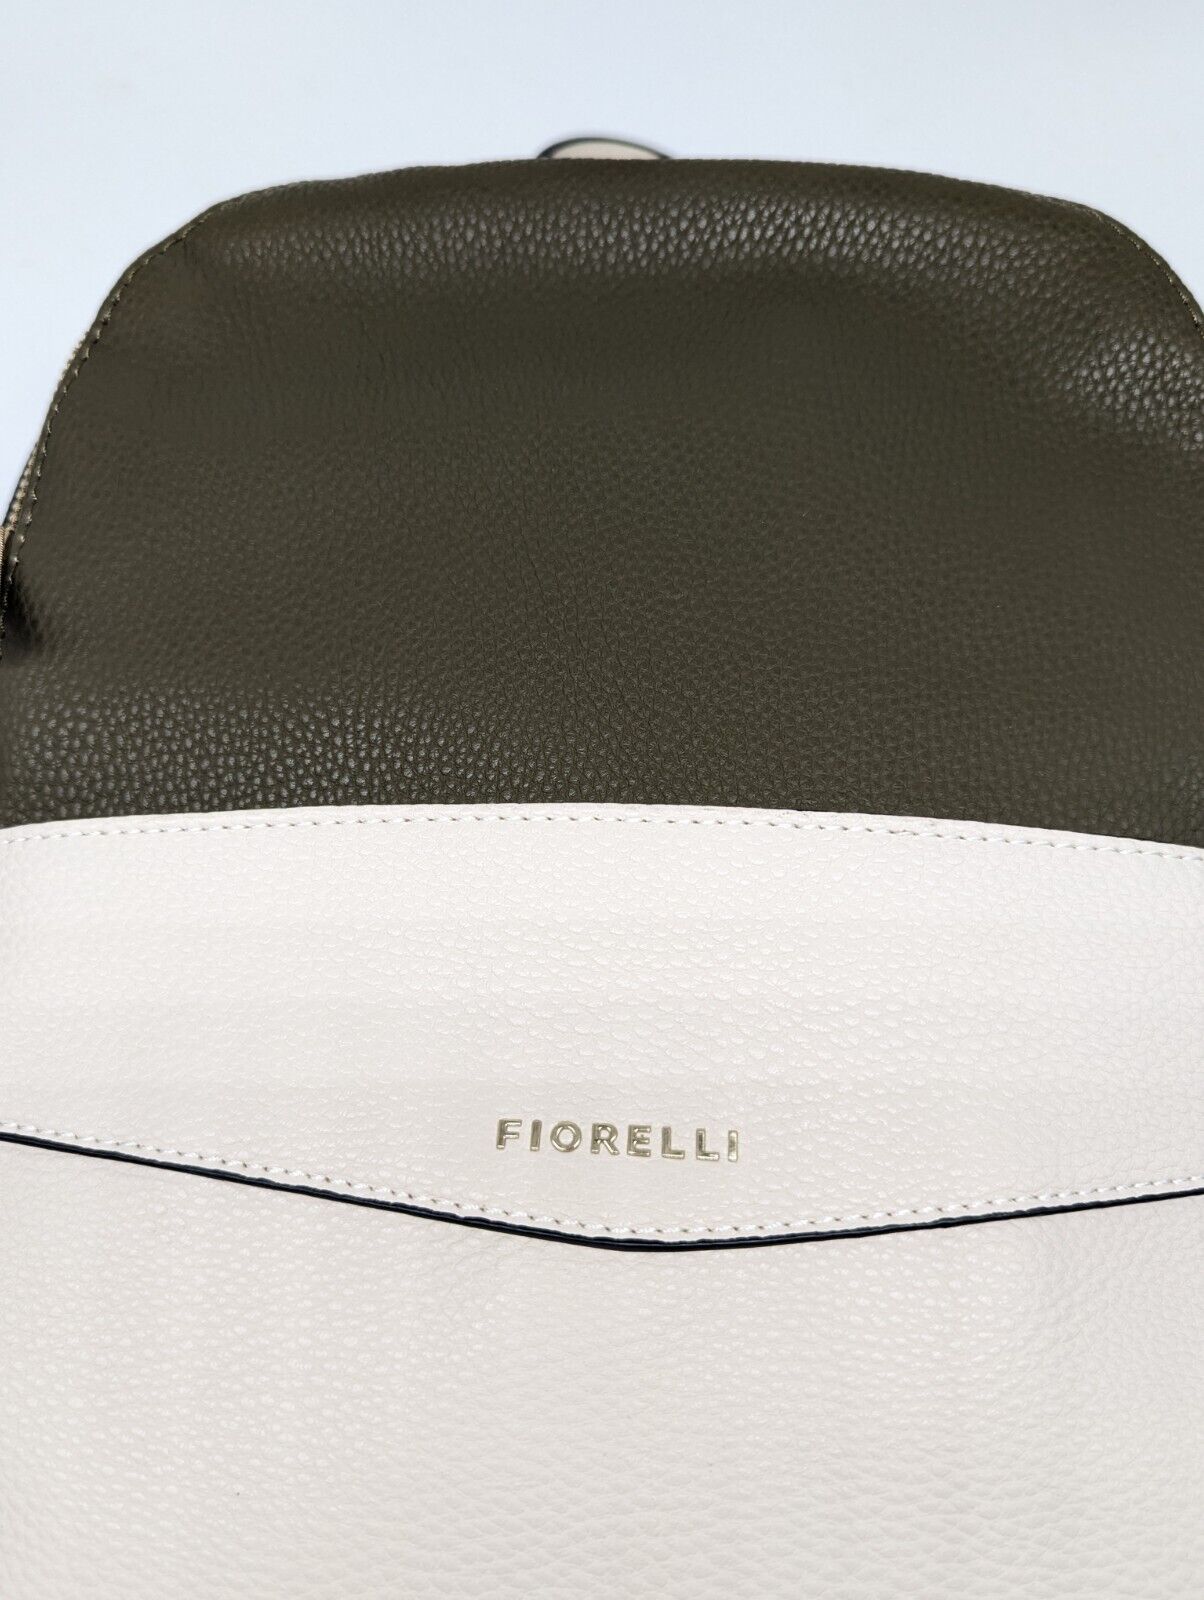 Fiorelli Trenton Khaki Backpack Large RRP £65